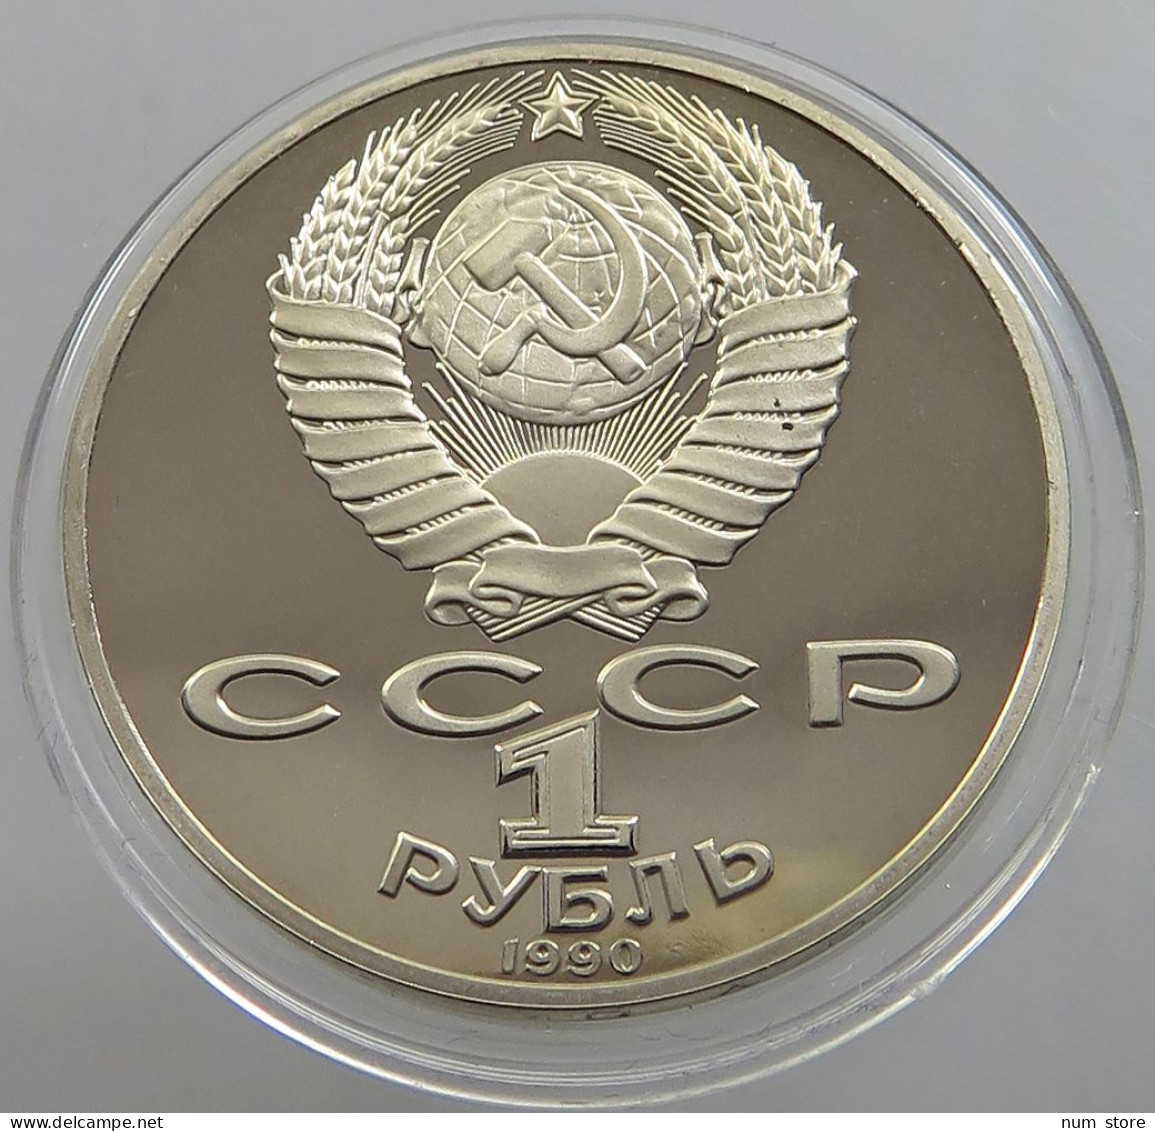 RUSSIA USSR 1 ROUBLE 1990 Tschaikowski PROOF #sm14 0701 - Russia